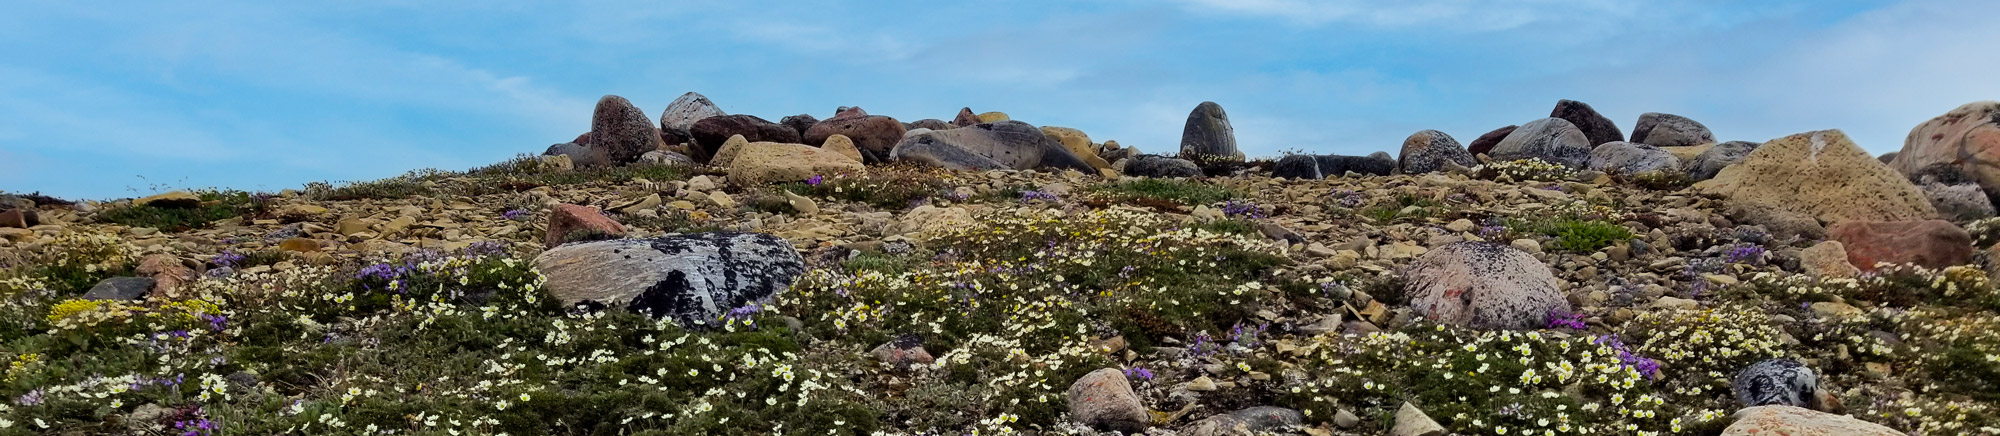 Kitikmeot wildflowers grow on rocky landscape